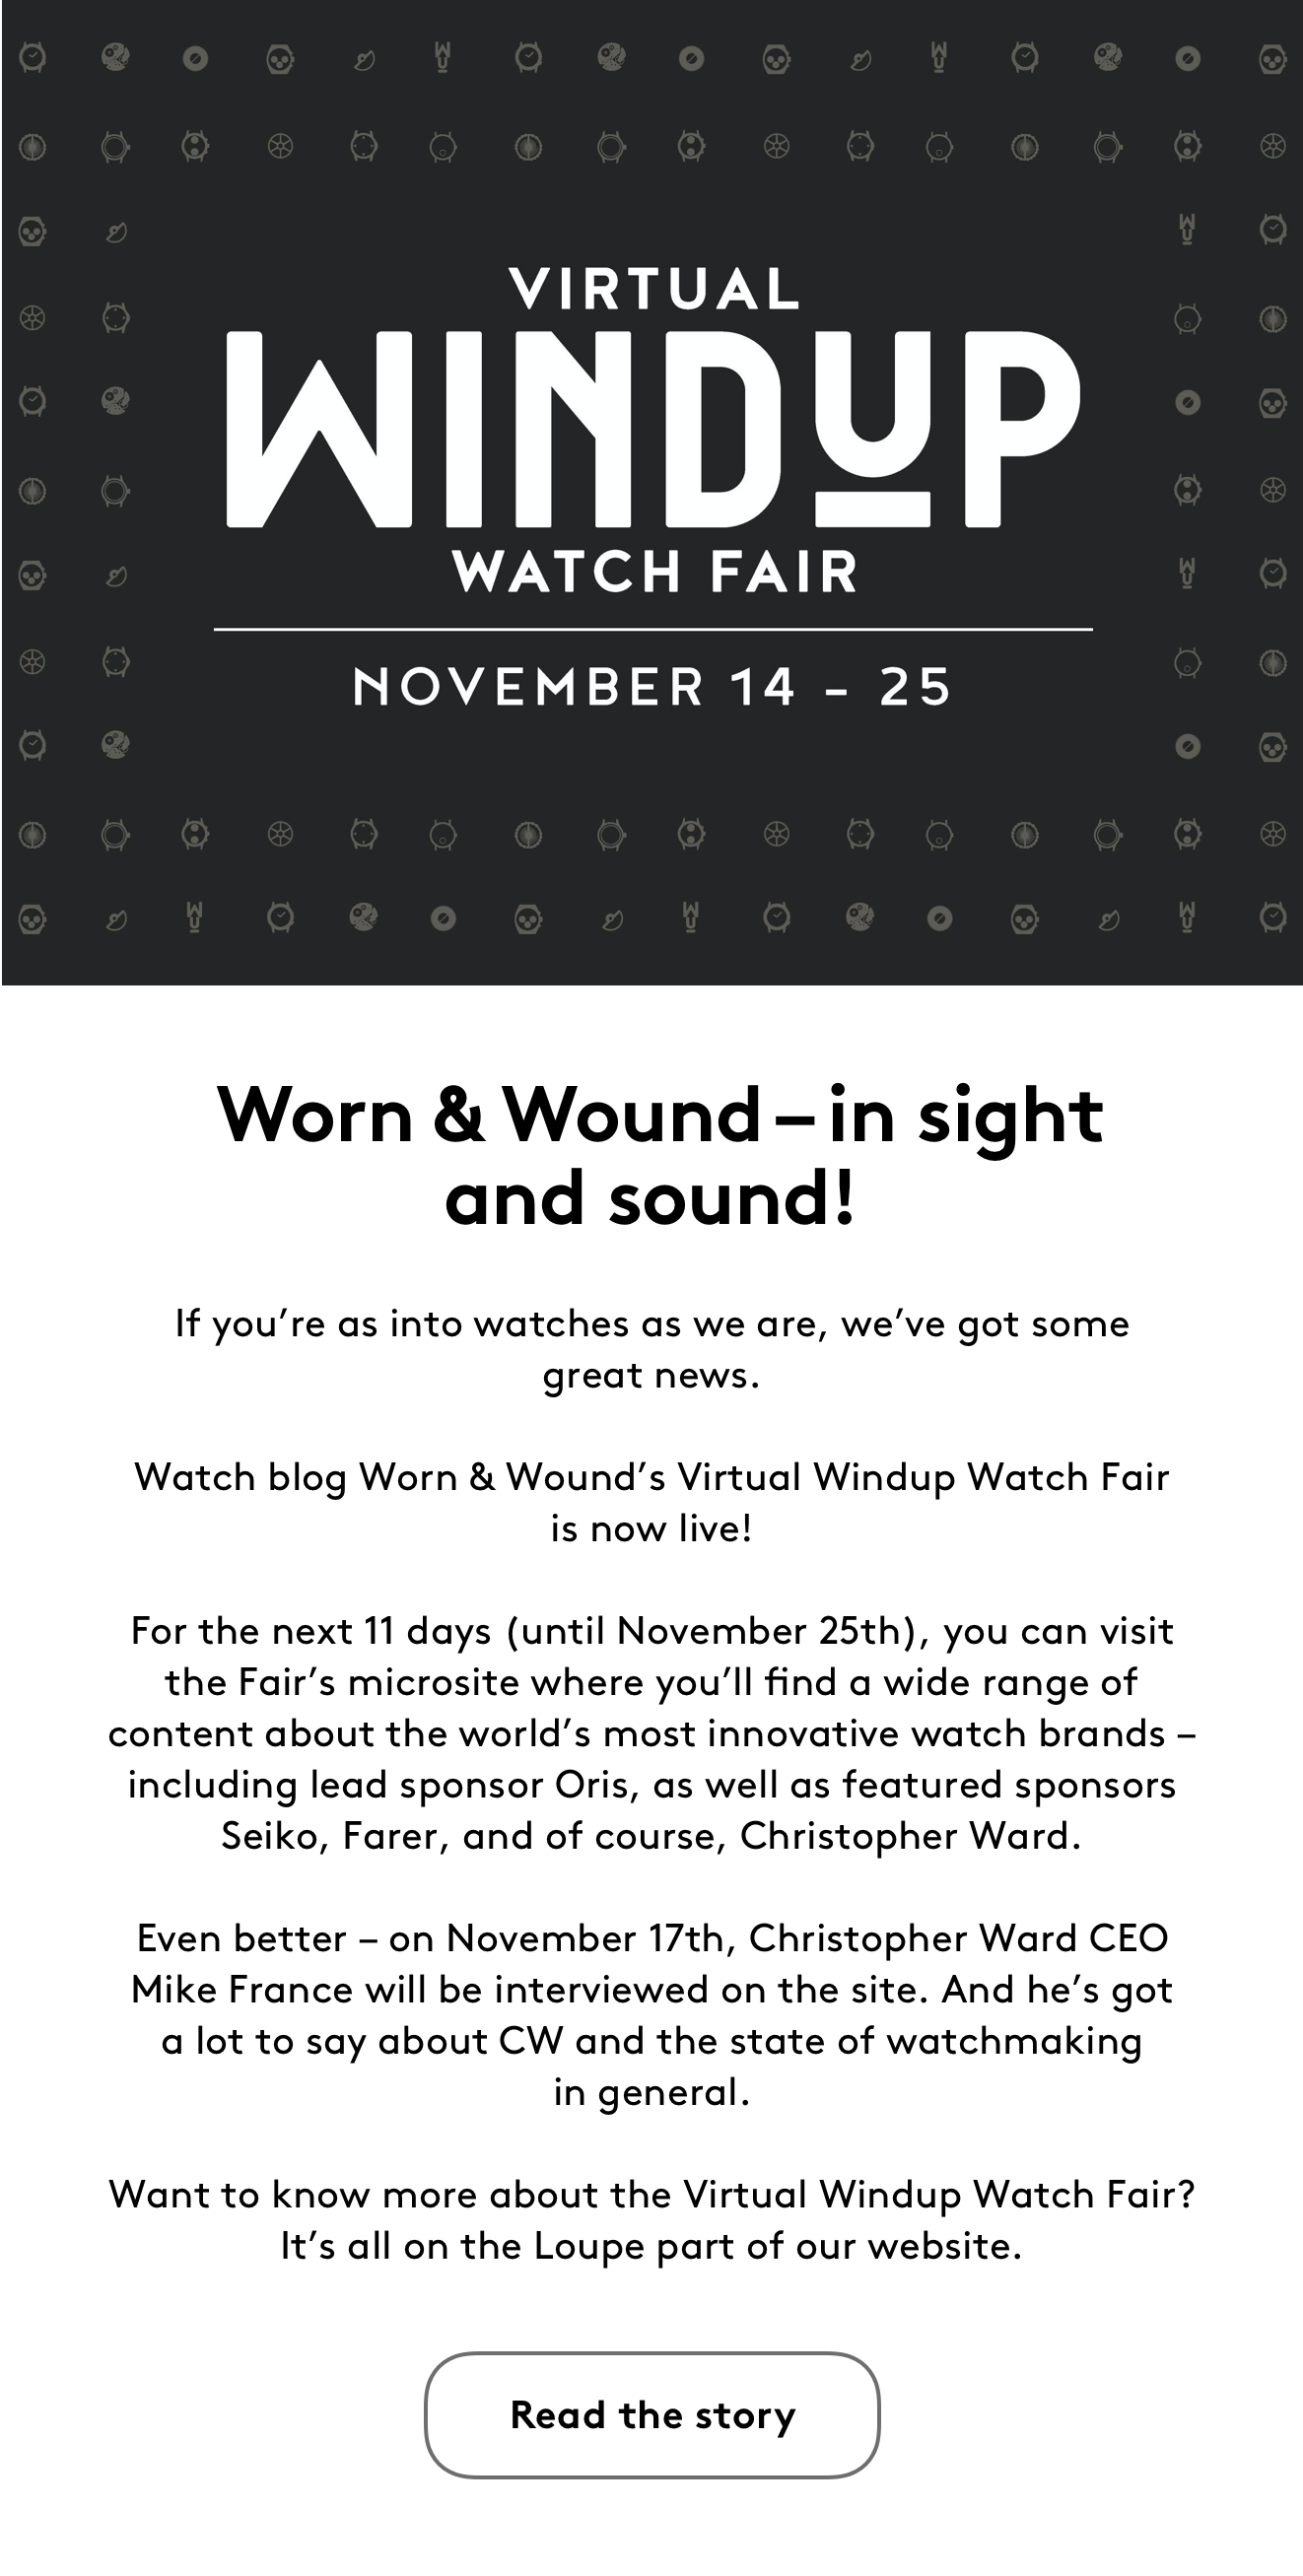 Worn & Wound – in sight and sound!